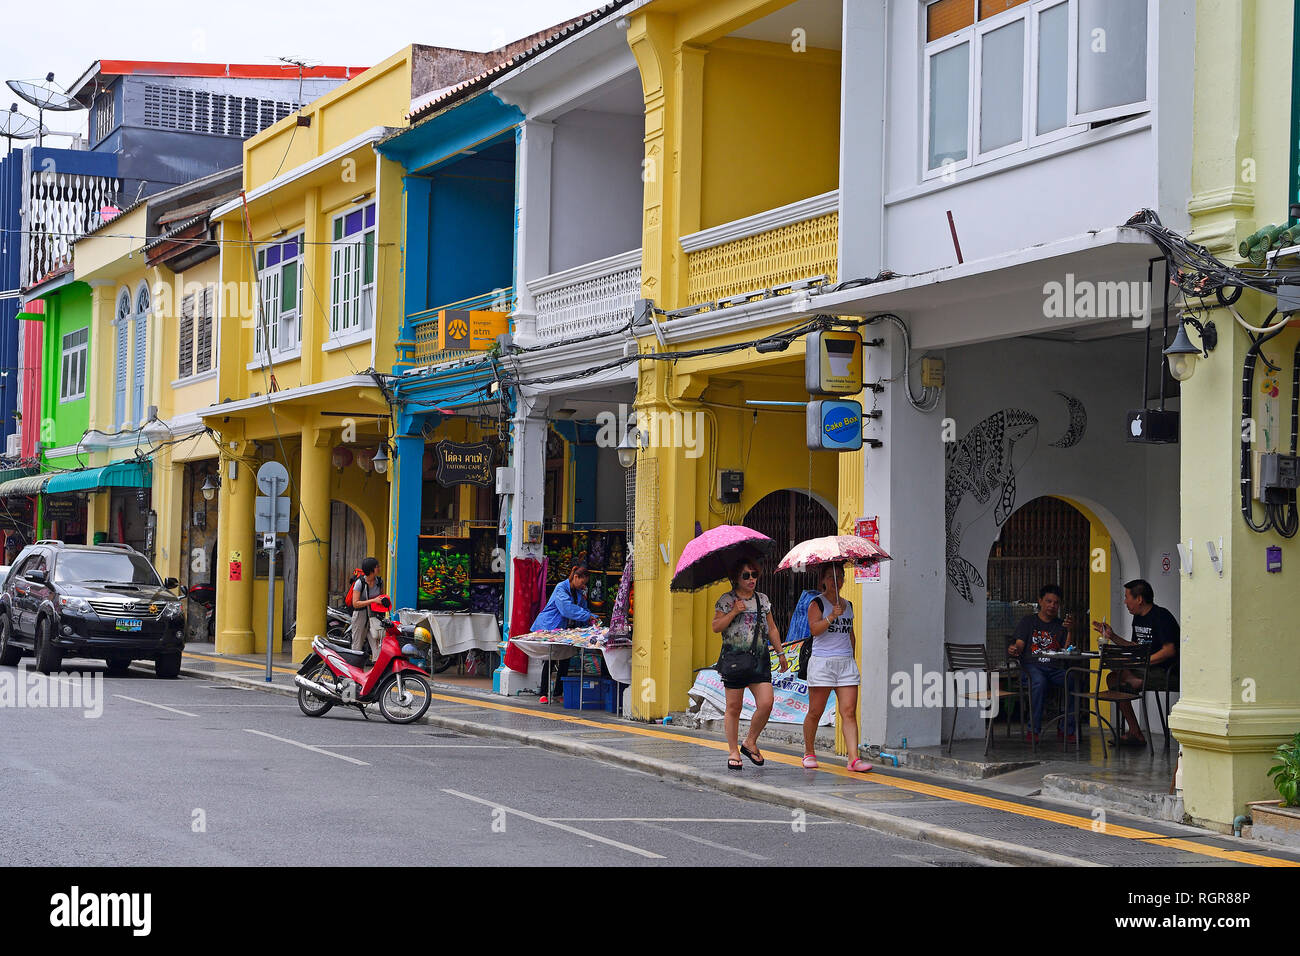 historische Haeuser, portugiesischer Stil, Phuket Town, Phuket, Thailand Stock Photo